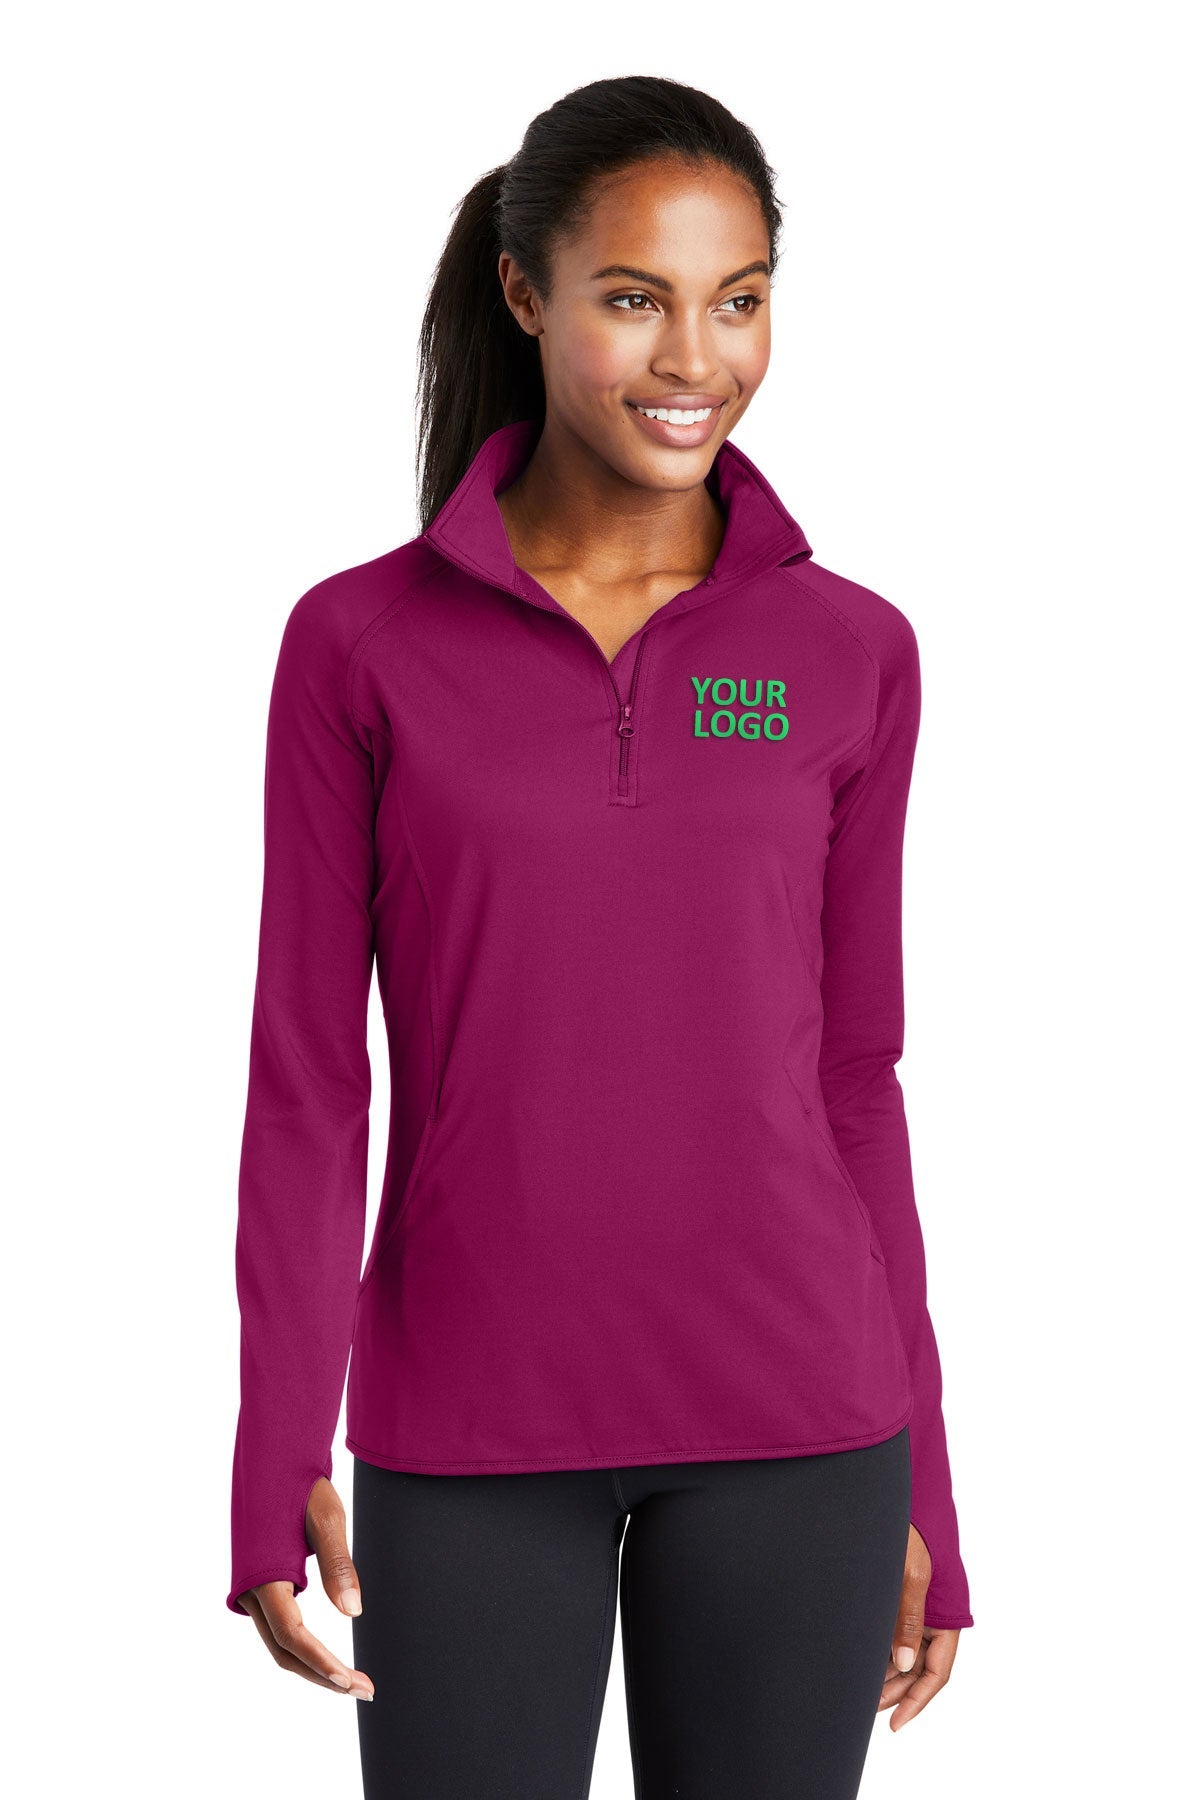 Pink 1/2 Zip Pullover Sweatshirt - Athletic apparel